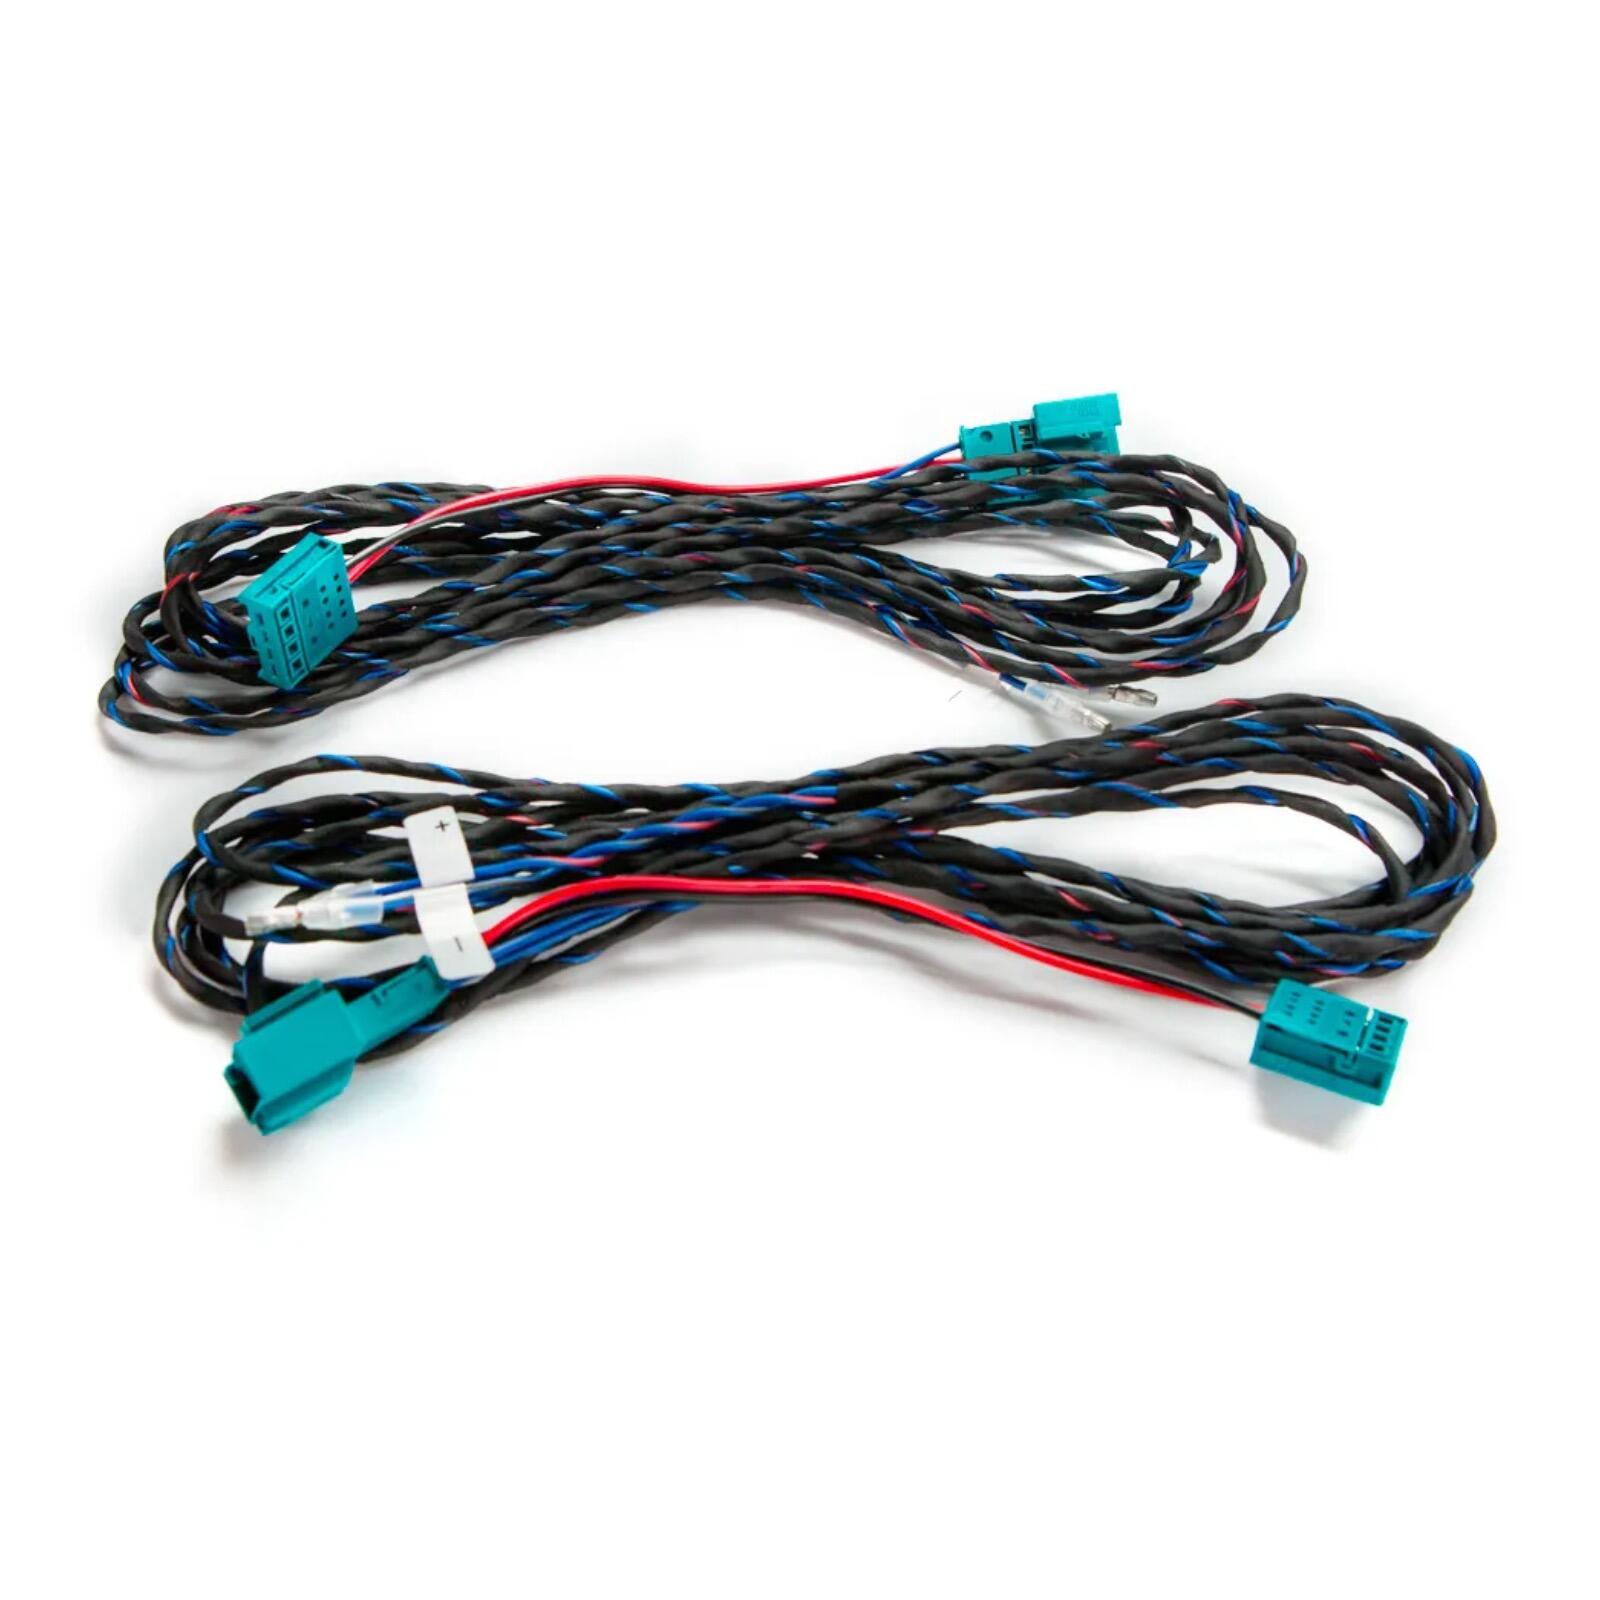 Audison APBMW BIAMP 1 Plug & Play BMW Mini Harness for Bi Amplify Front Speakers